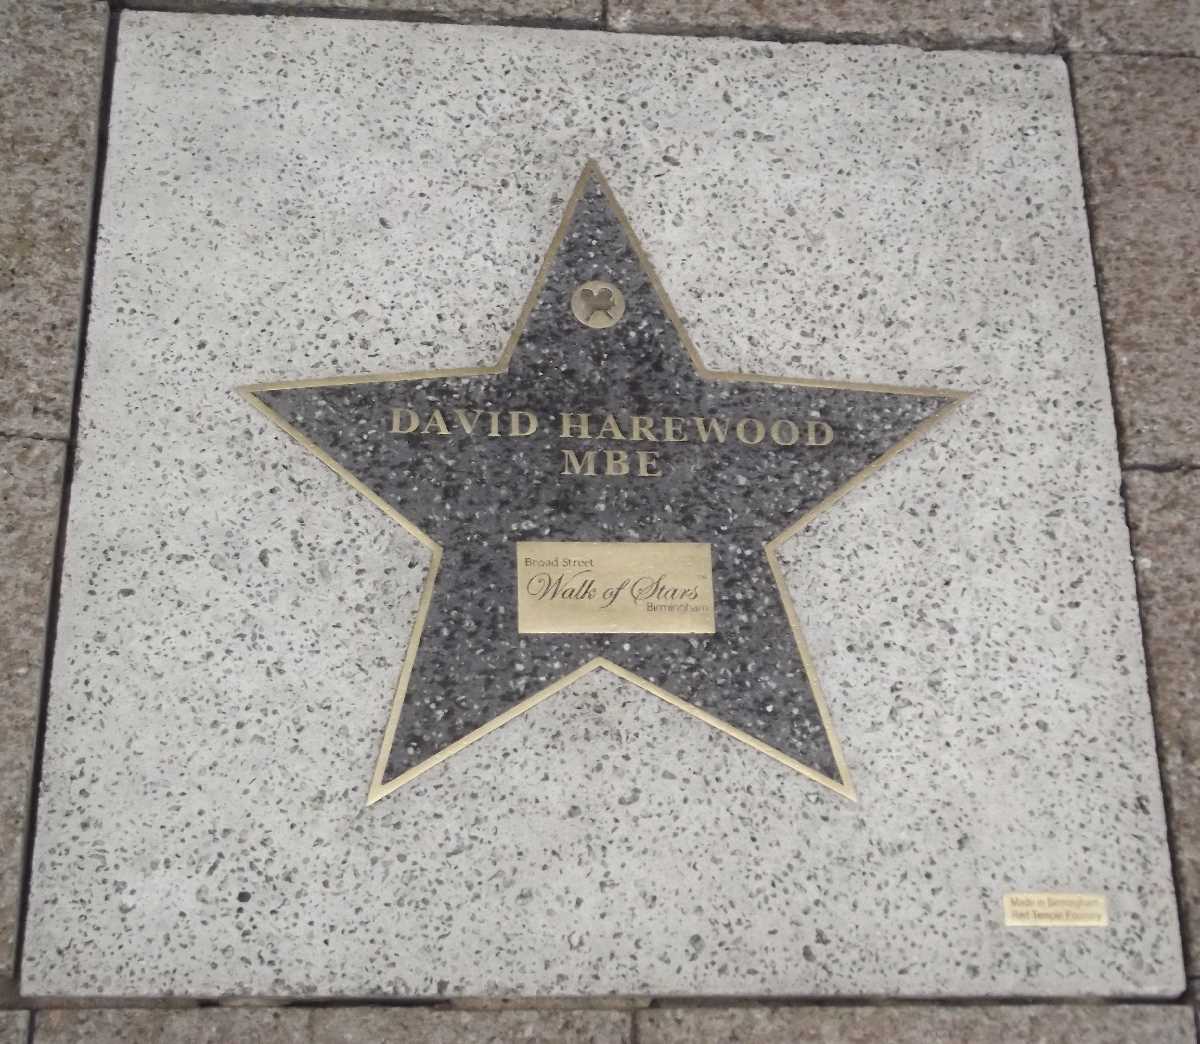 David Harewood